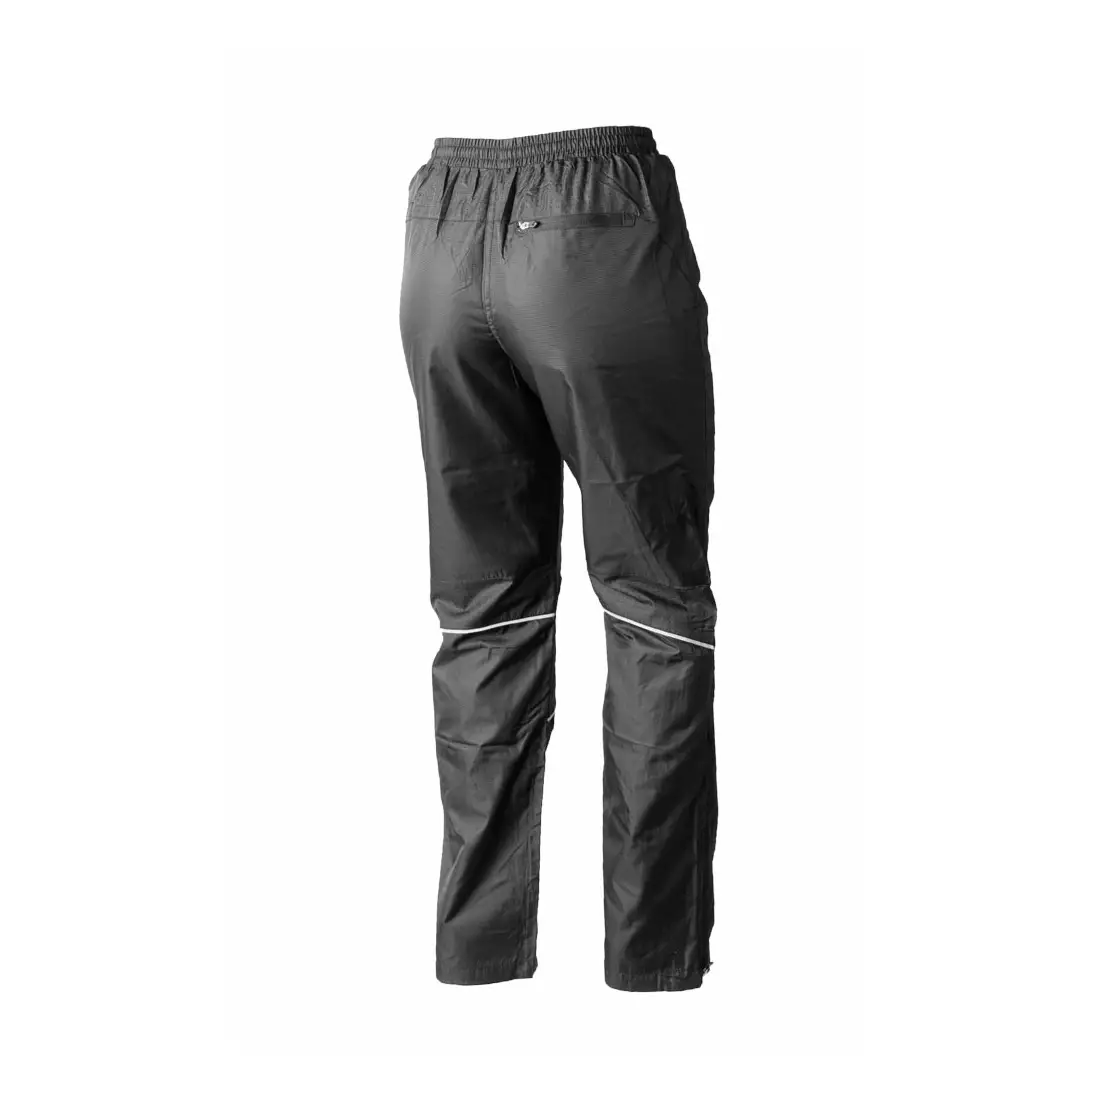 NEWLINE PERFORM THERMAL PANTS - women's running pants 10046-060